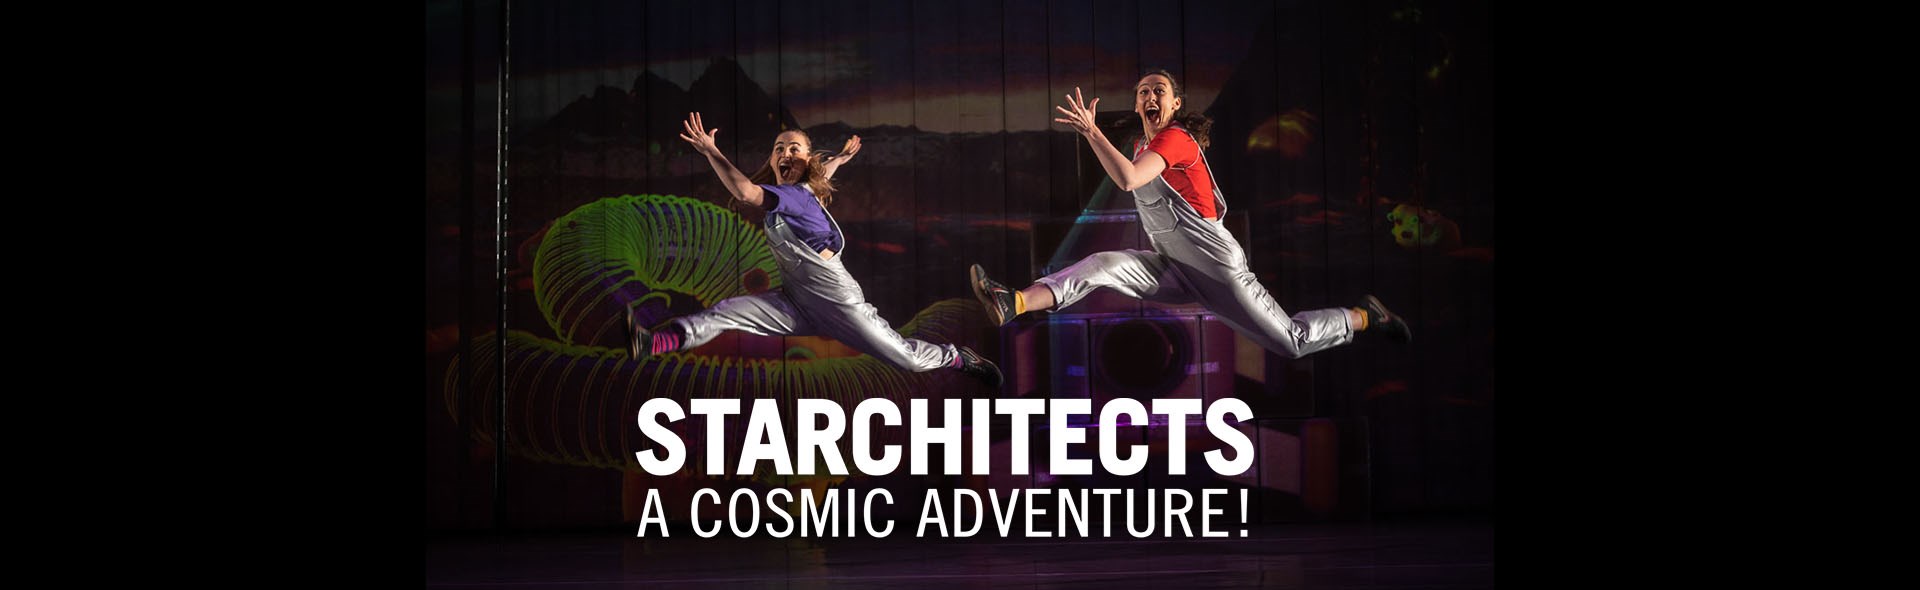 Starchitects - A Cosmic Adventure!